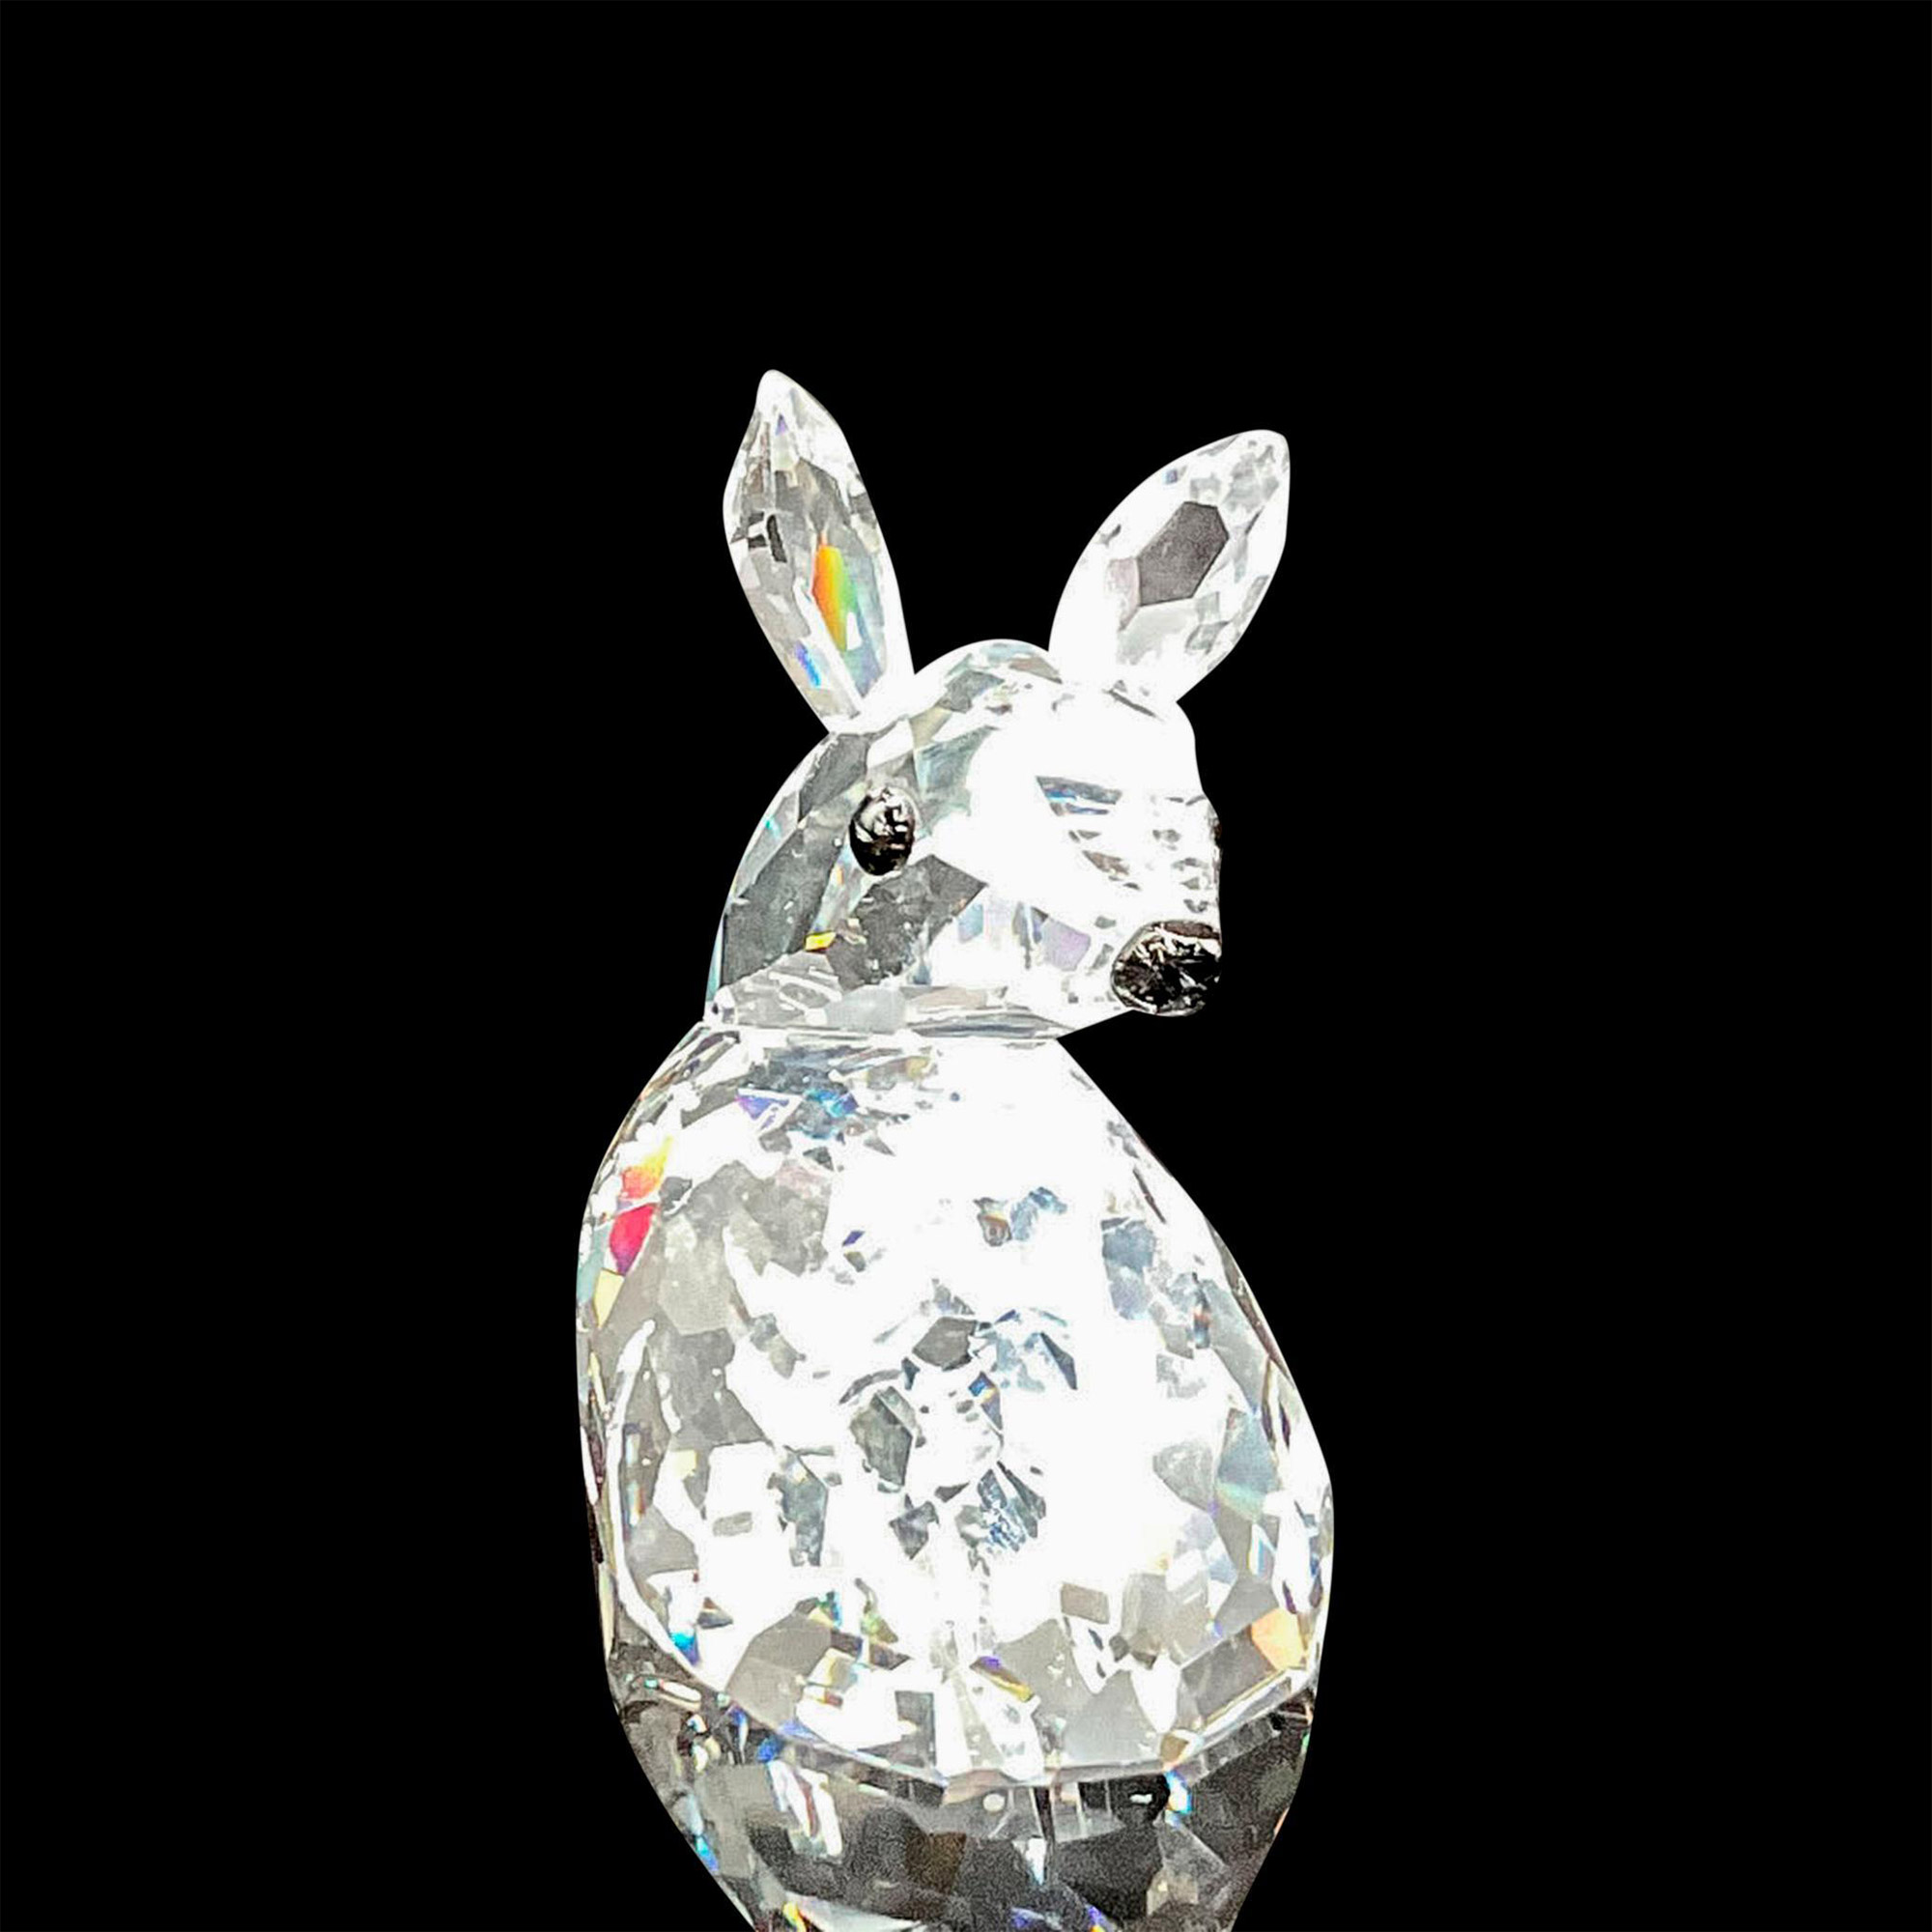 Swarovski Silver Crystal Figurine, Roe Deer Fawn - Image 2 of 4